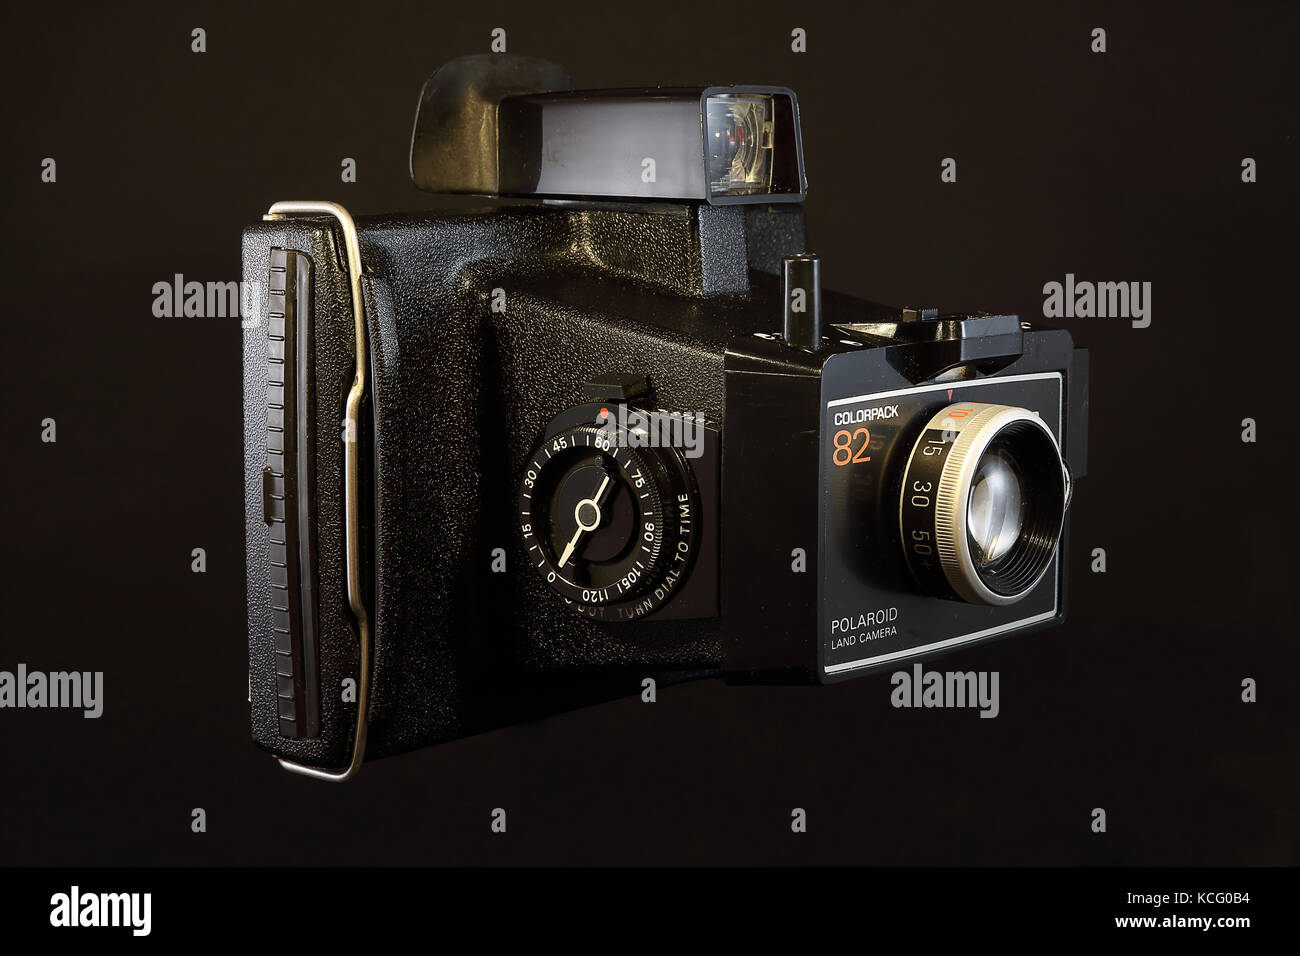 Polaroid Colorpack 80 camera Stock Photo - Alamy